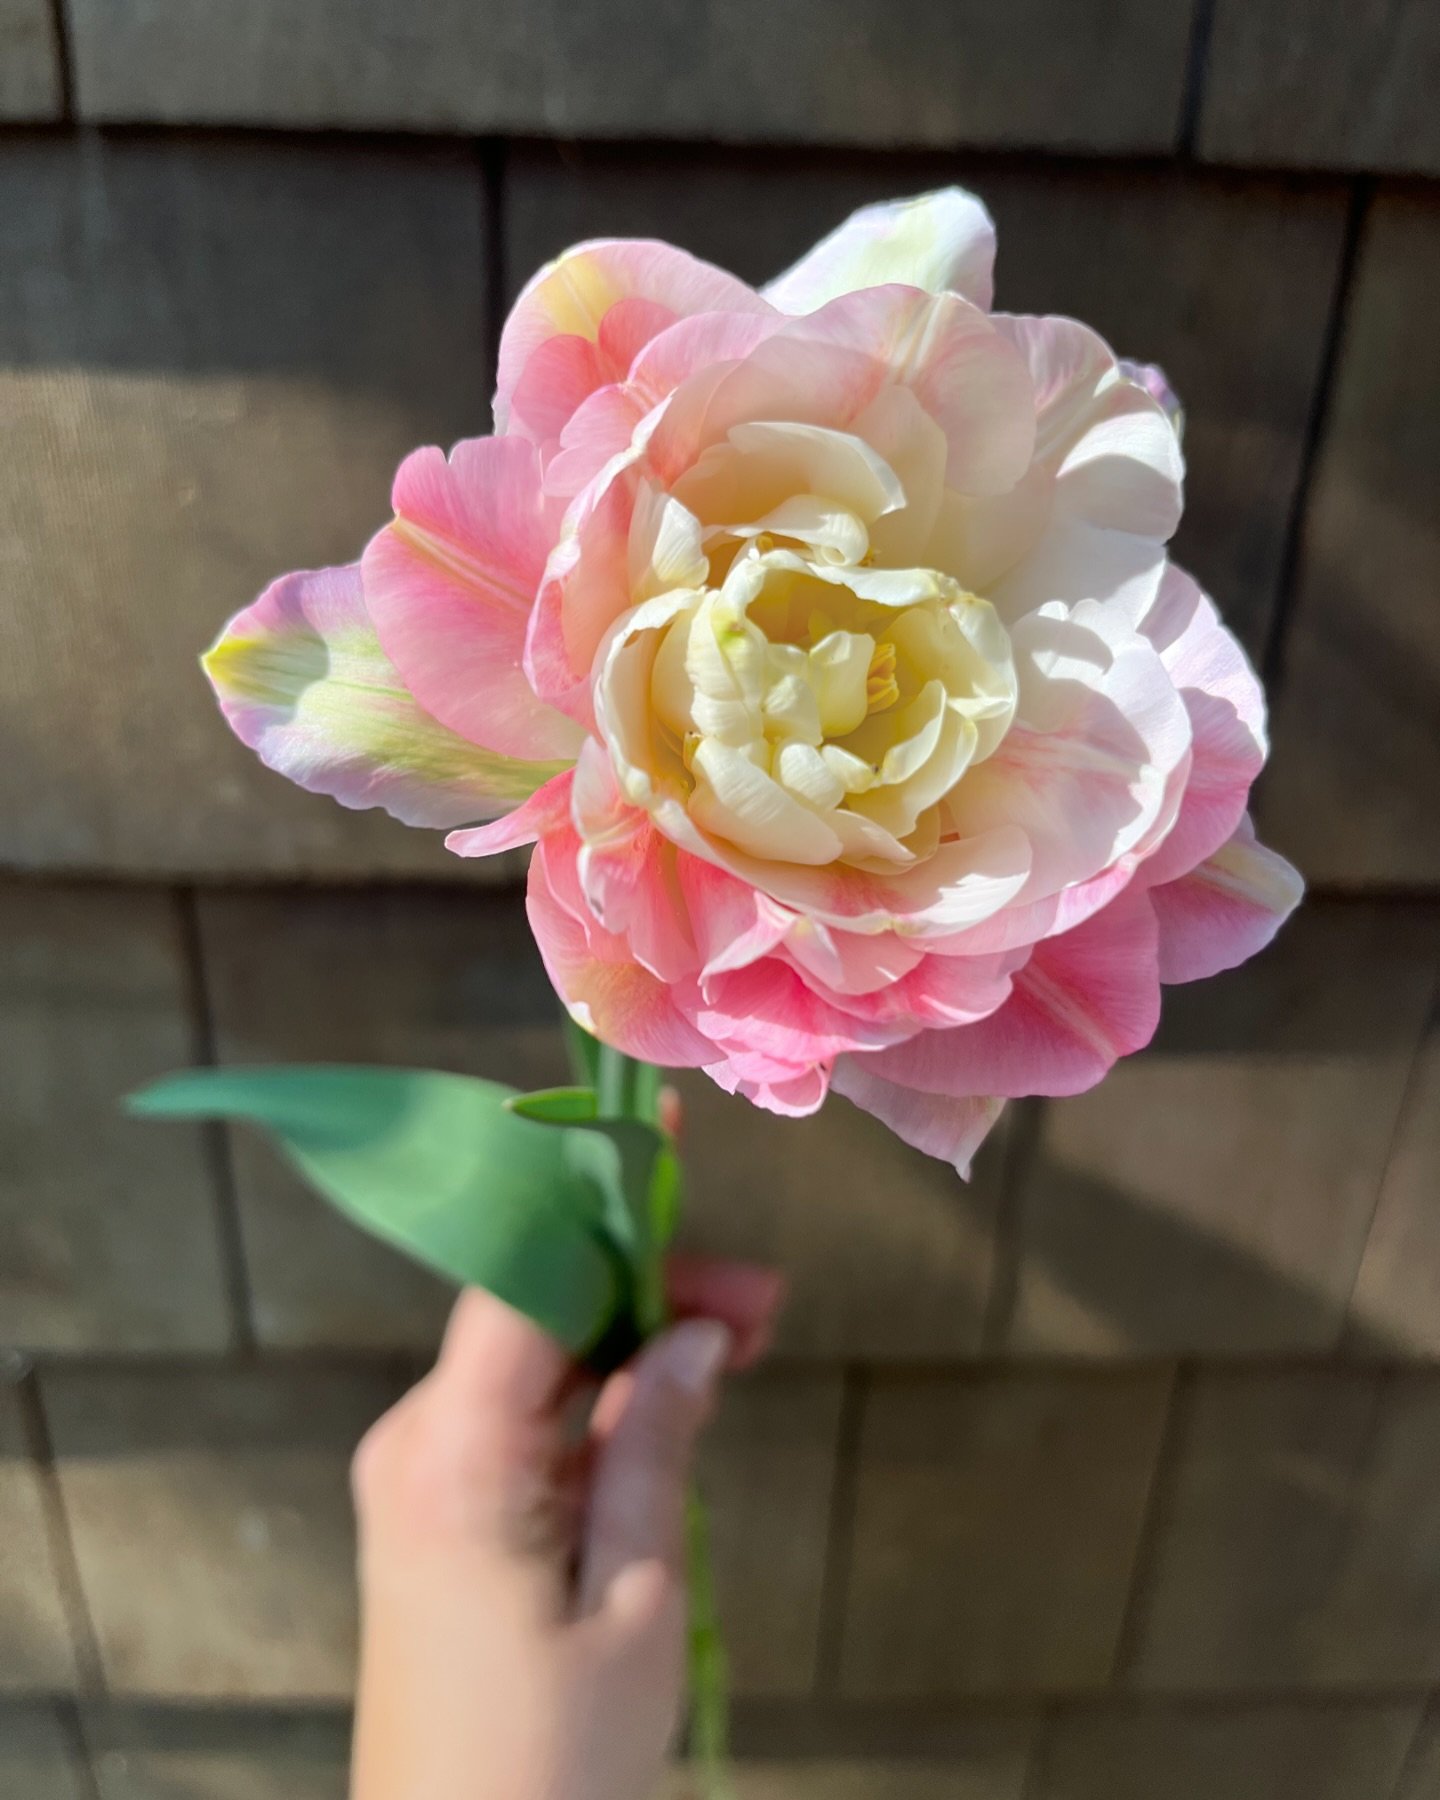 Consolation prize for waking up to open tulips&hellip;

#tulipseason #alchemyfarmhouse #aprilflowers #hudsonvalley #gardinerny #newpaltzny #hudsonvalleytulips